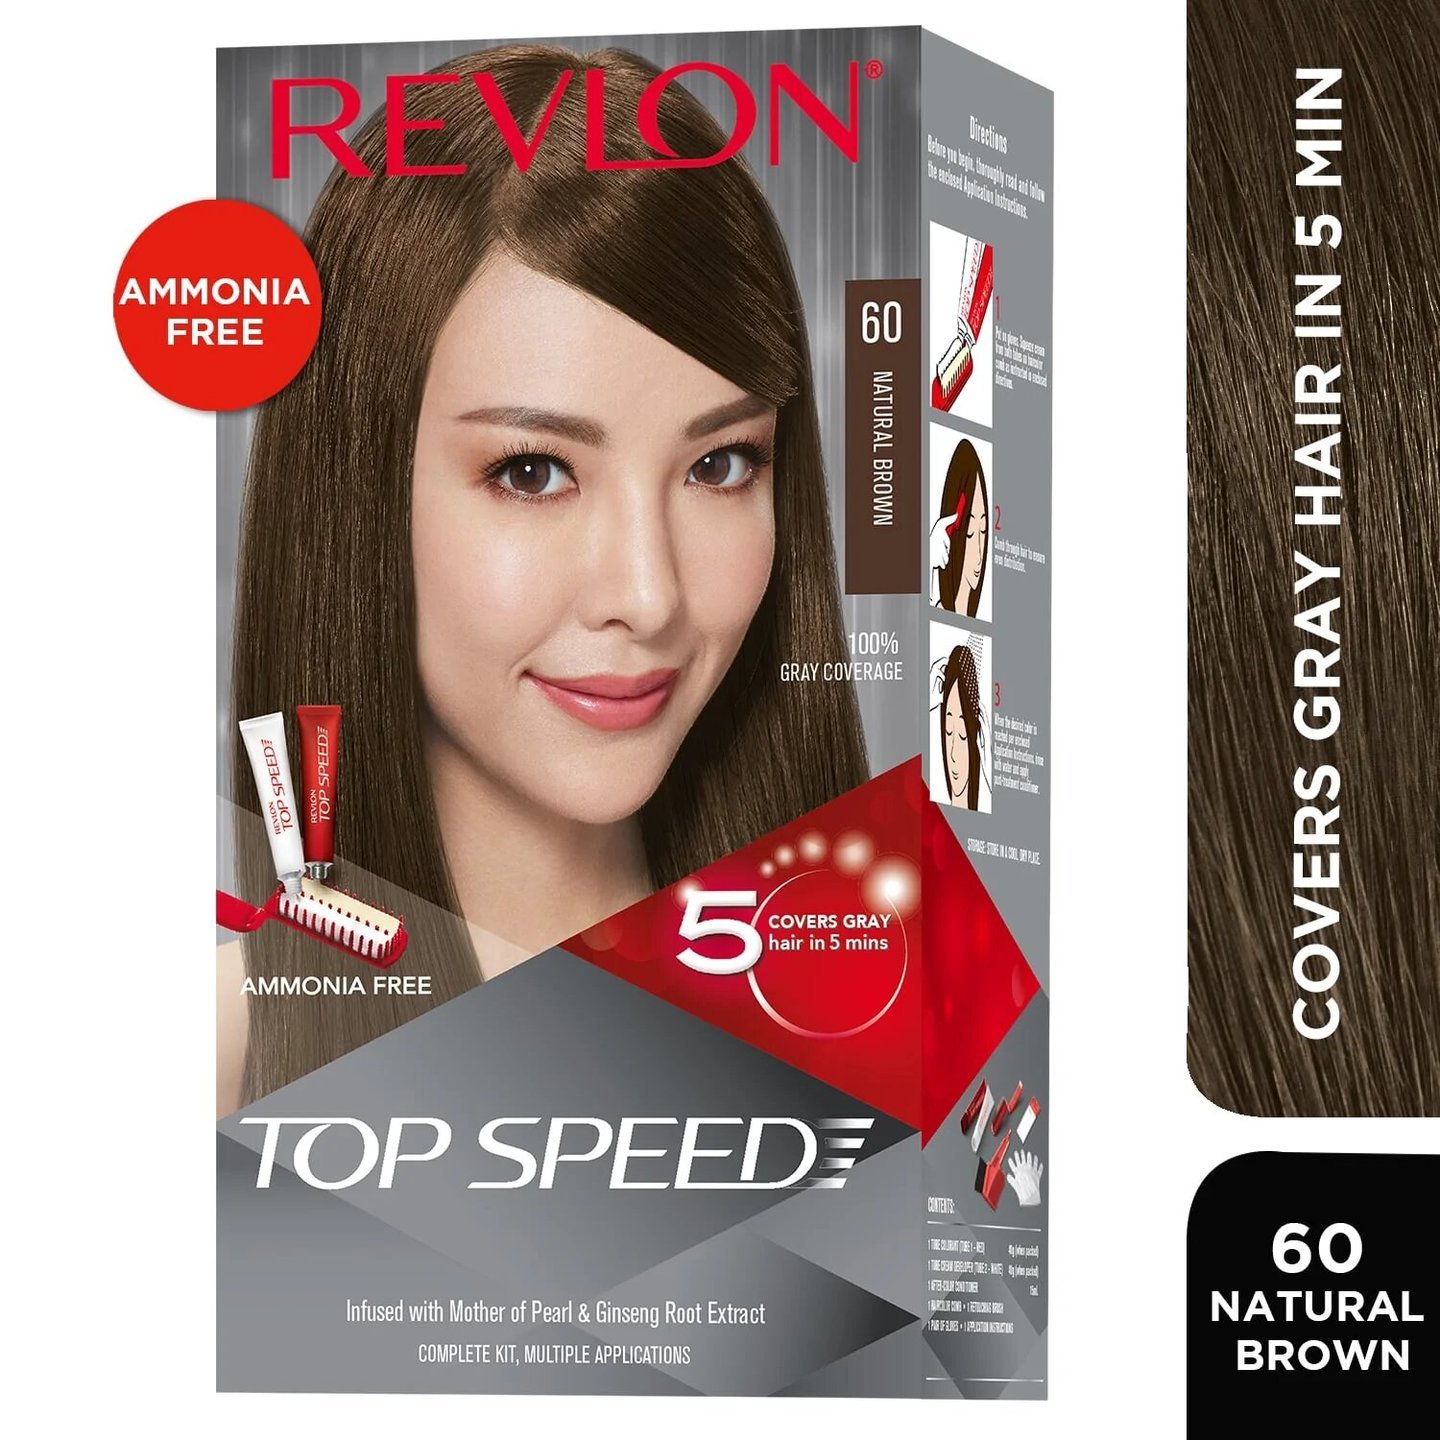 Revlon TOP SPEED NATURAL BROWN 60 Hair Color